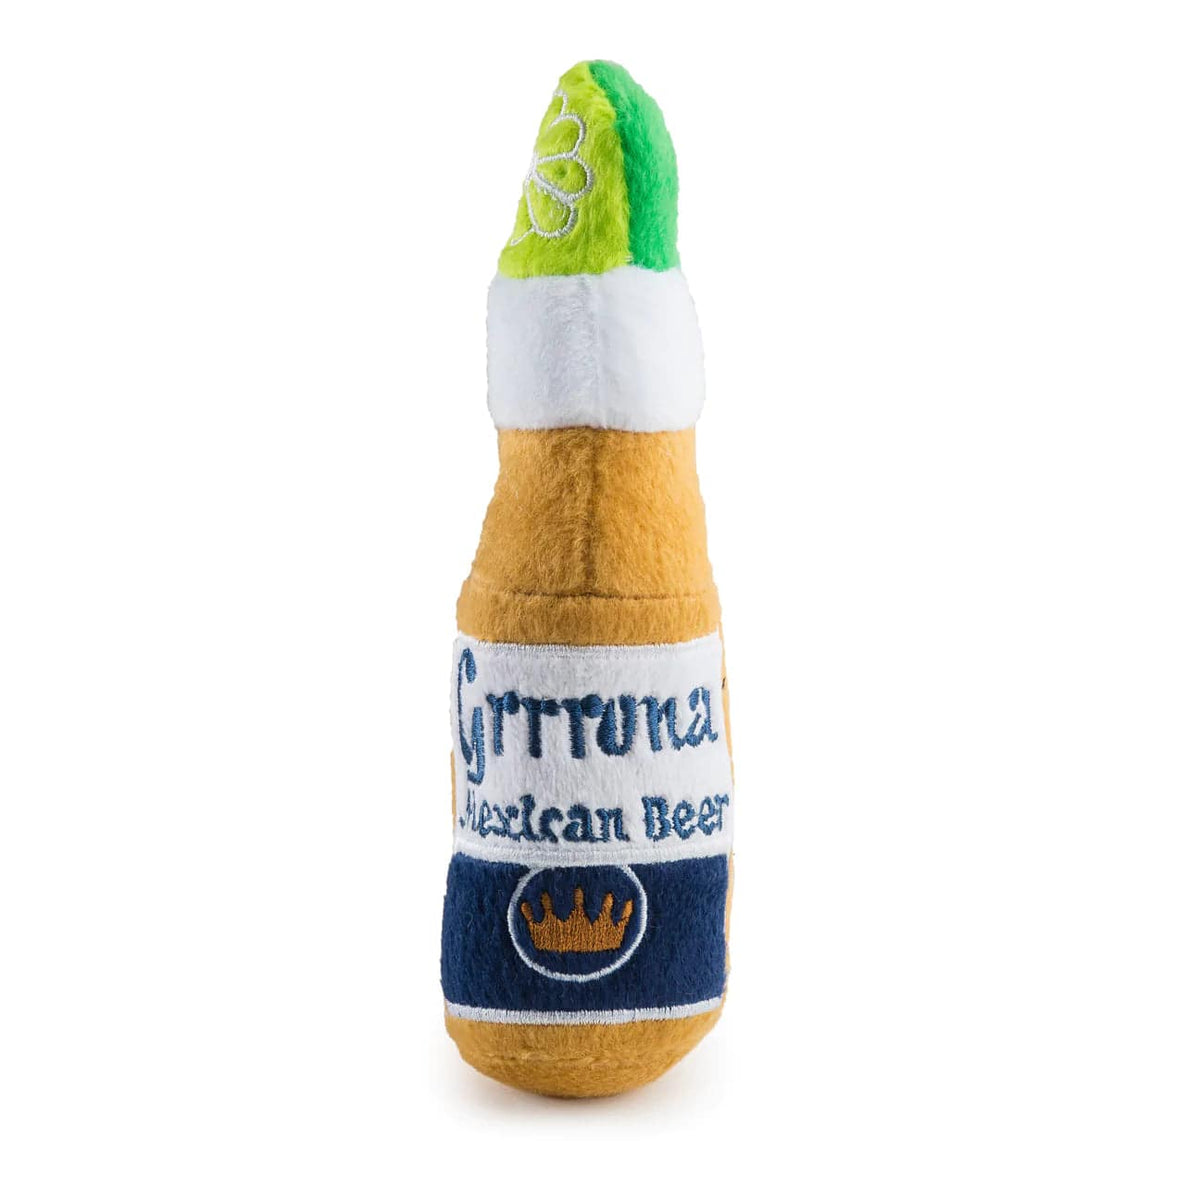 Grrrona Beer Bottle Dog Toy - The Preppy Bunny